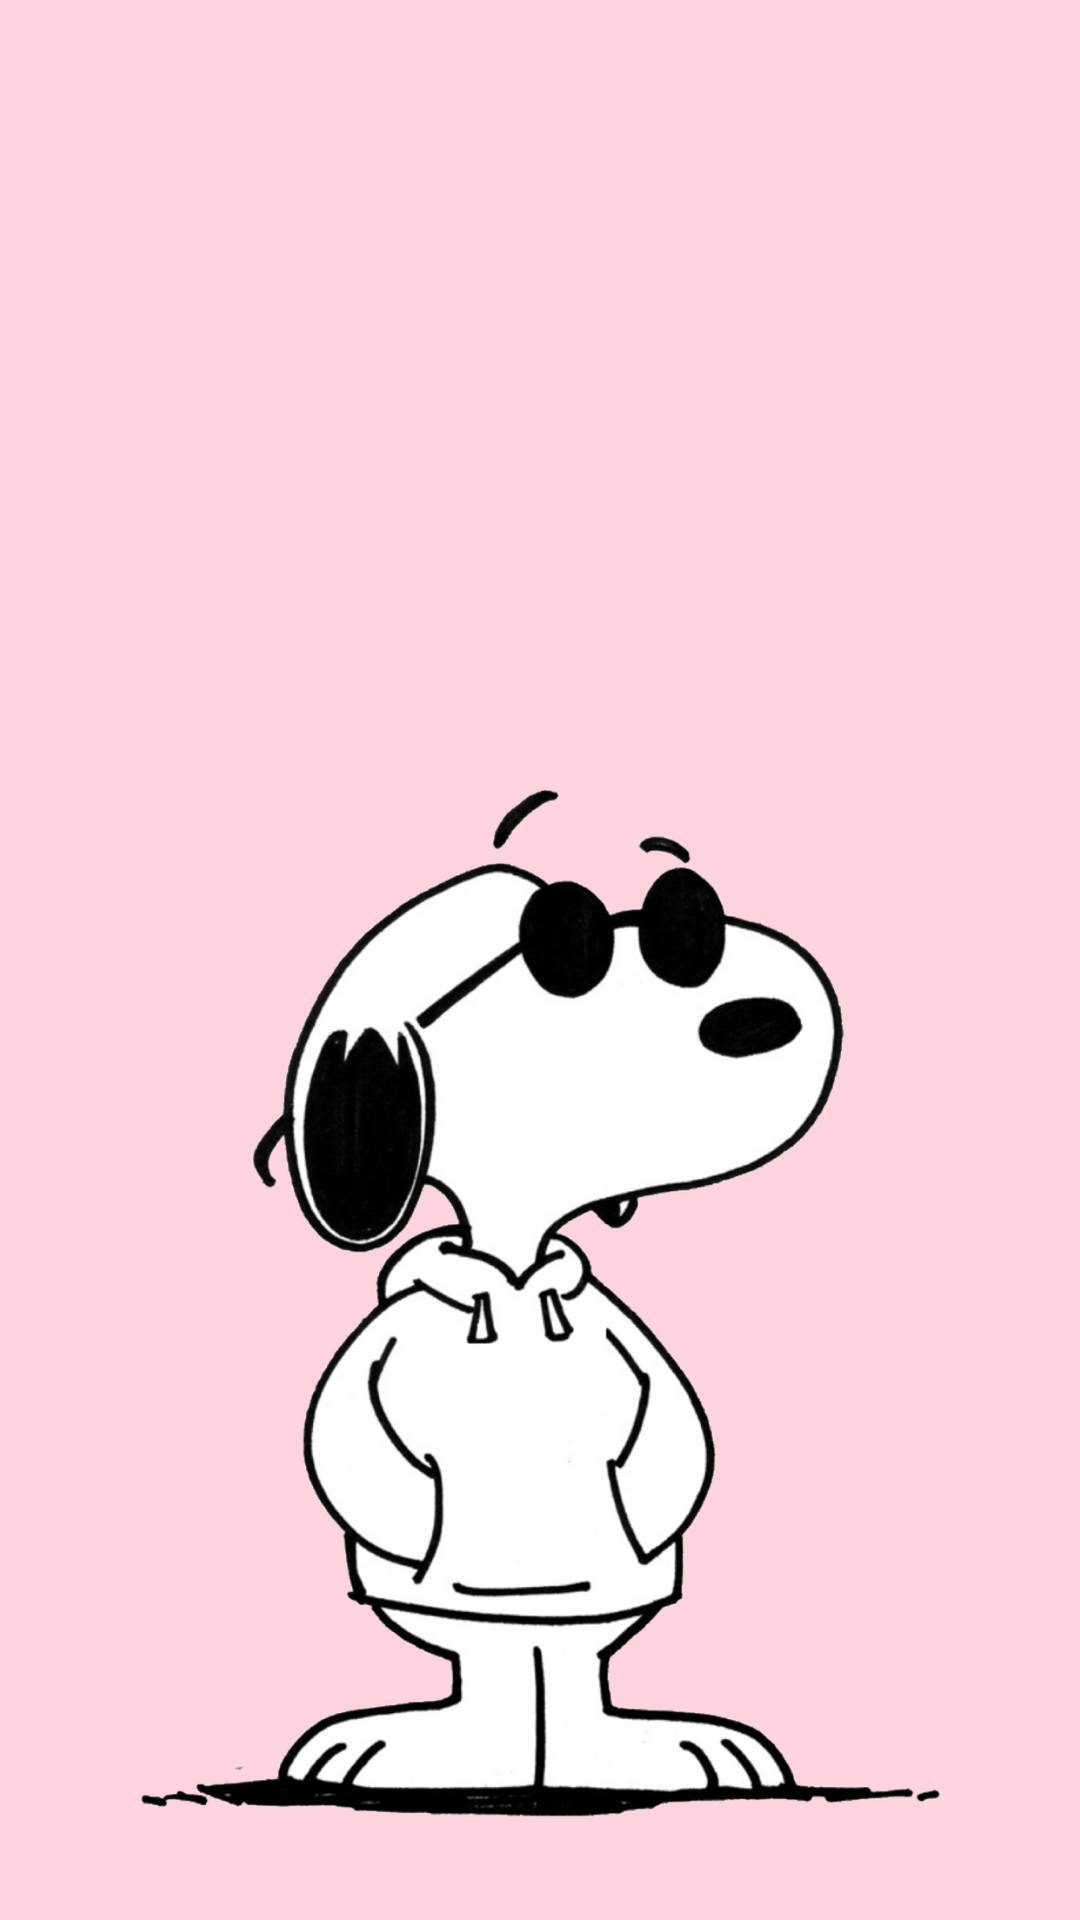 Savage Look Snoopy Cartoon Iphone